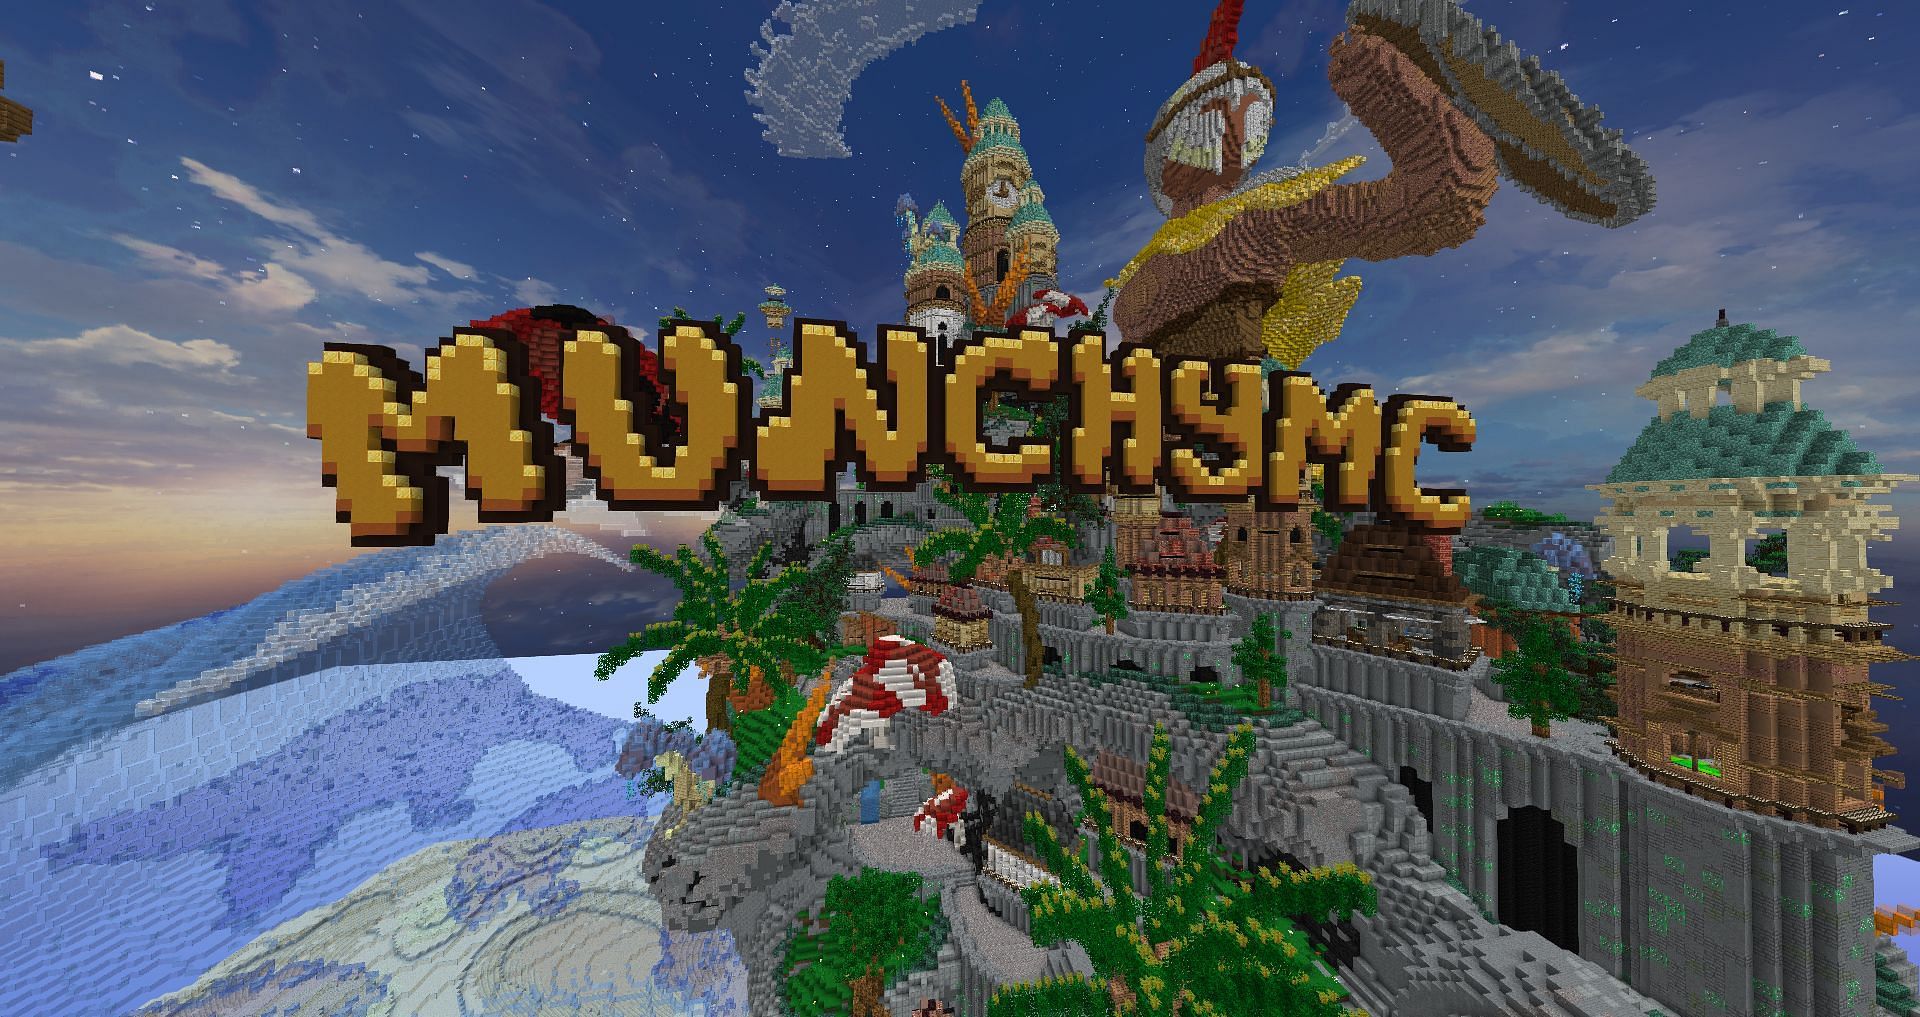 MunchyMC is yet another great server for prison (Image via MunchyMC)